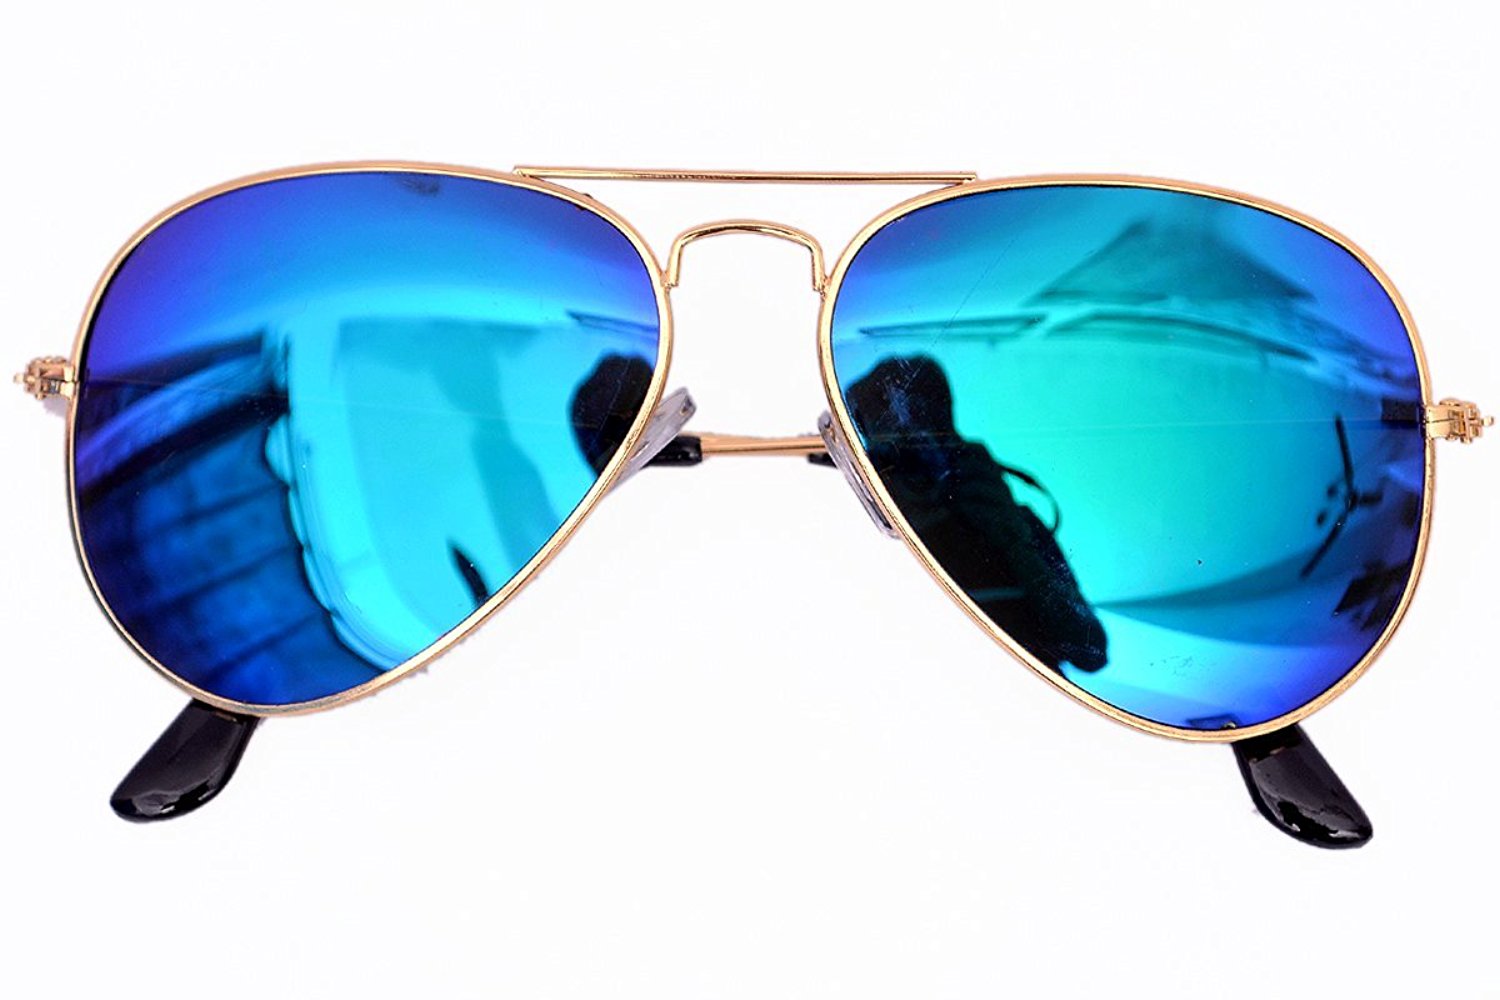 Blue sunglasses